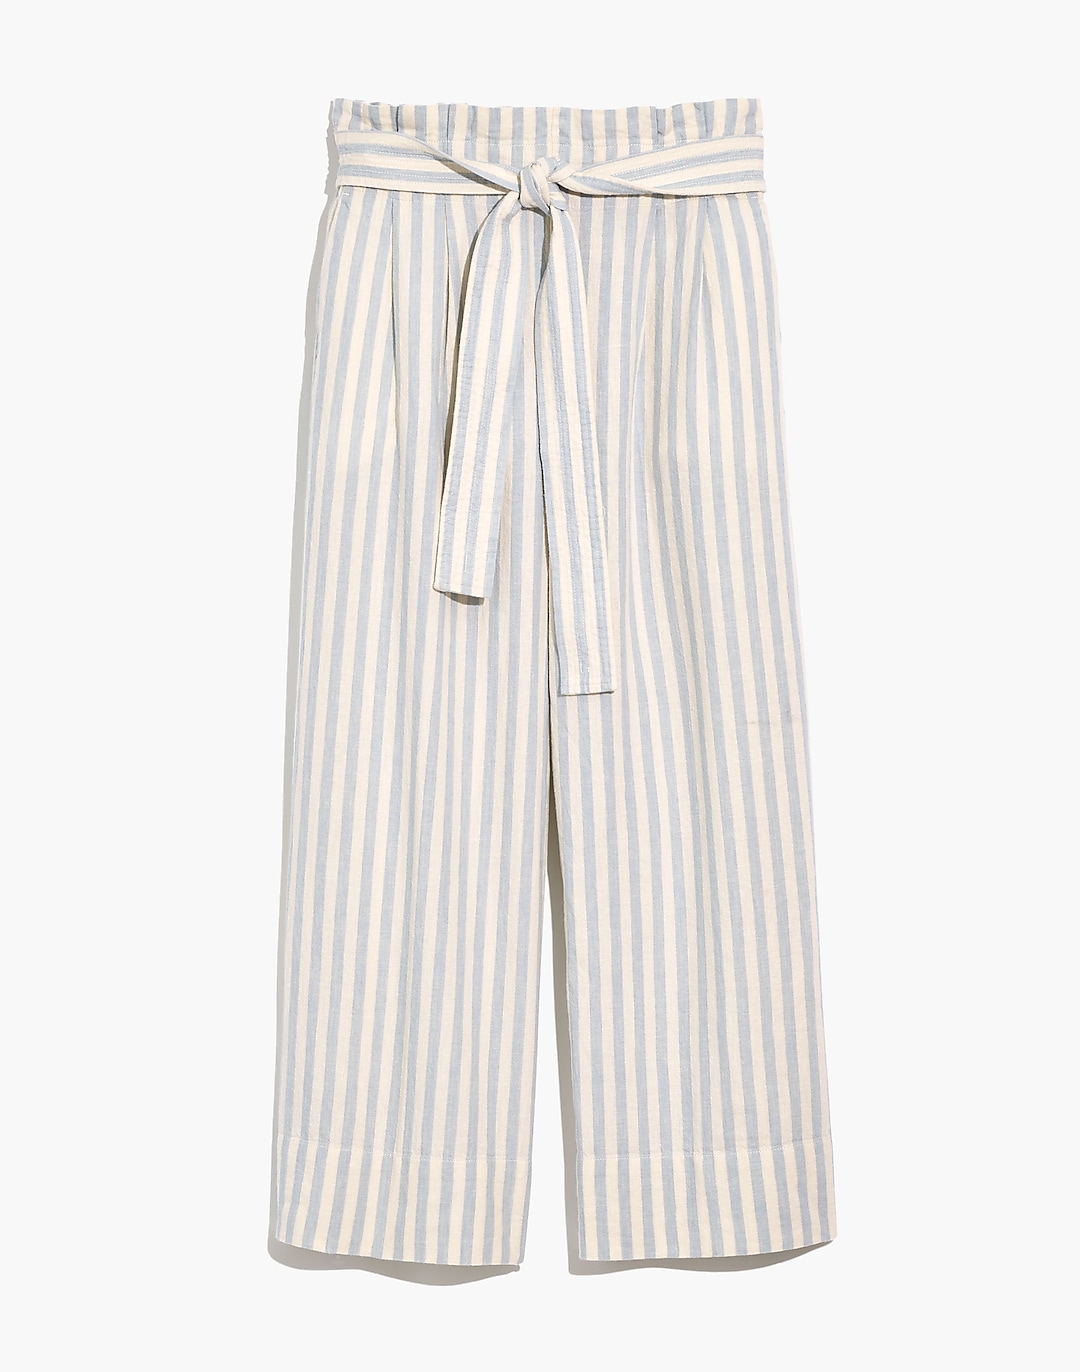 Tie-Waist Huston Pull-On Crop Pants in Stripe